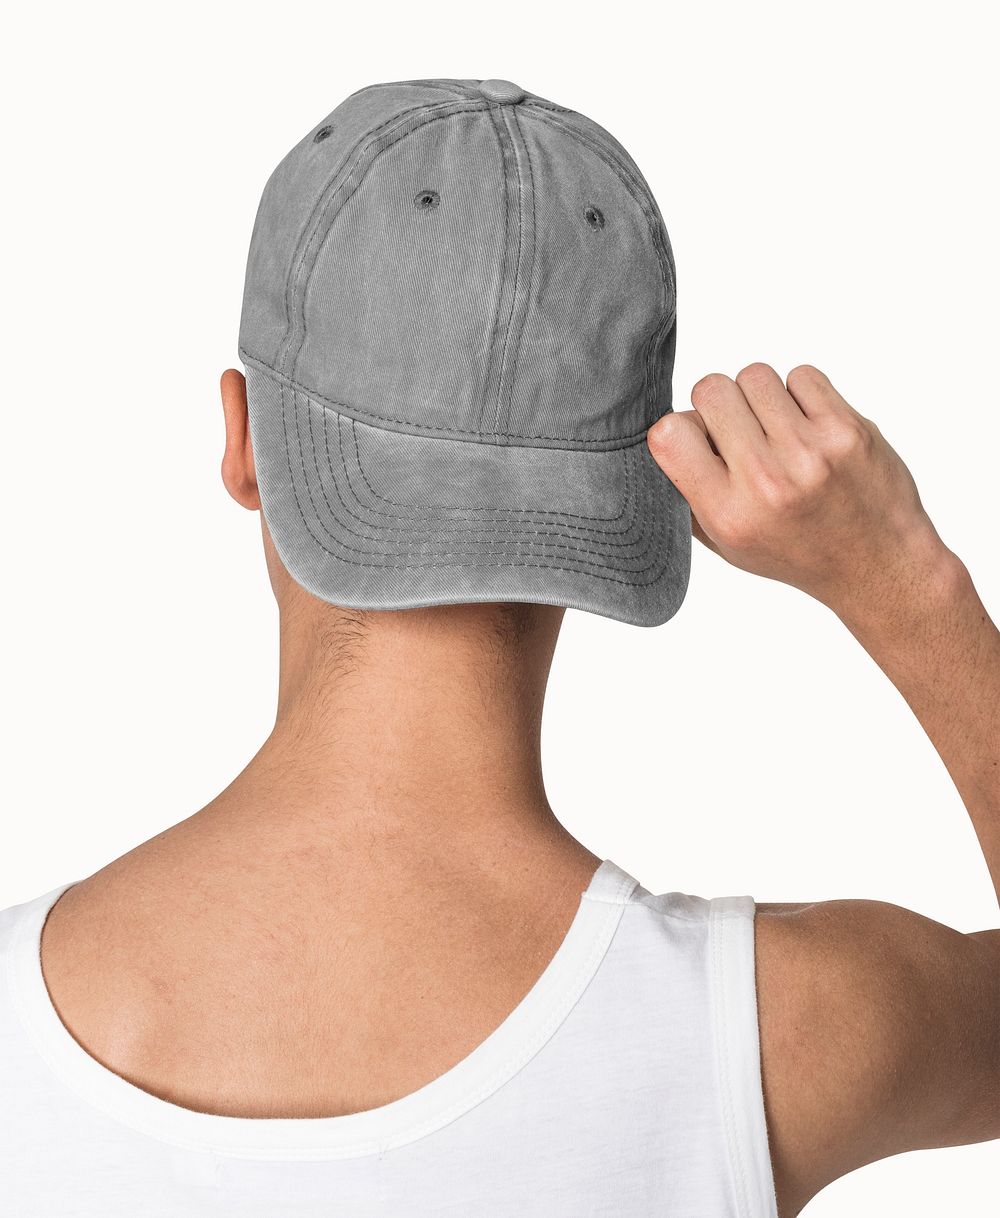 Teenage boy in gray cap studio candid for street fashion shoot